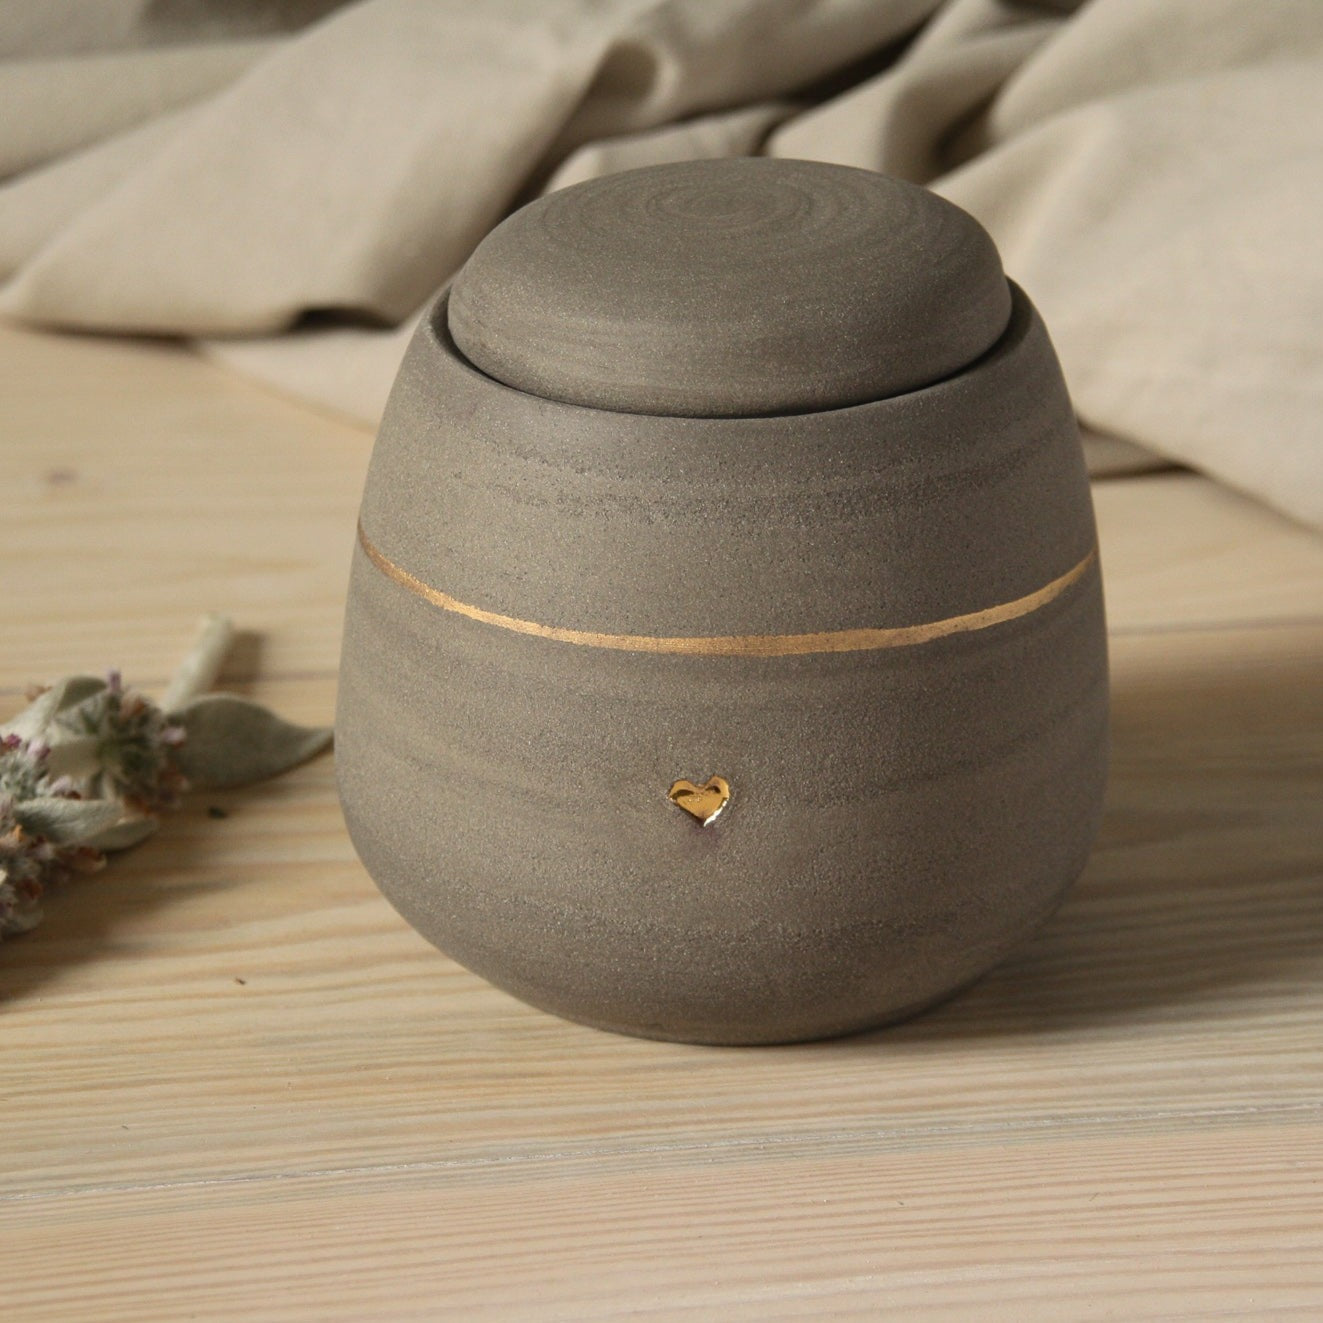 Handmade small dog urn